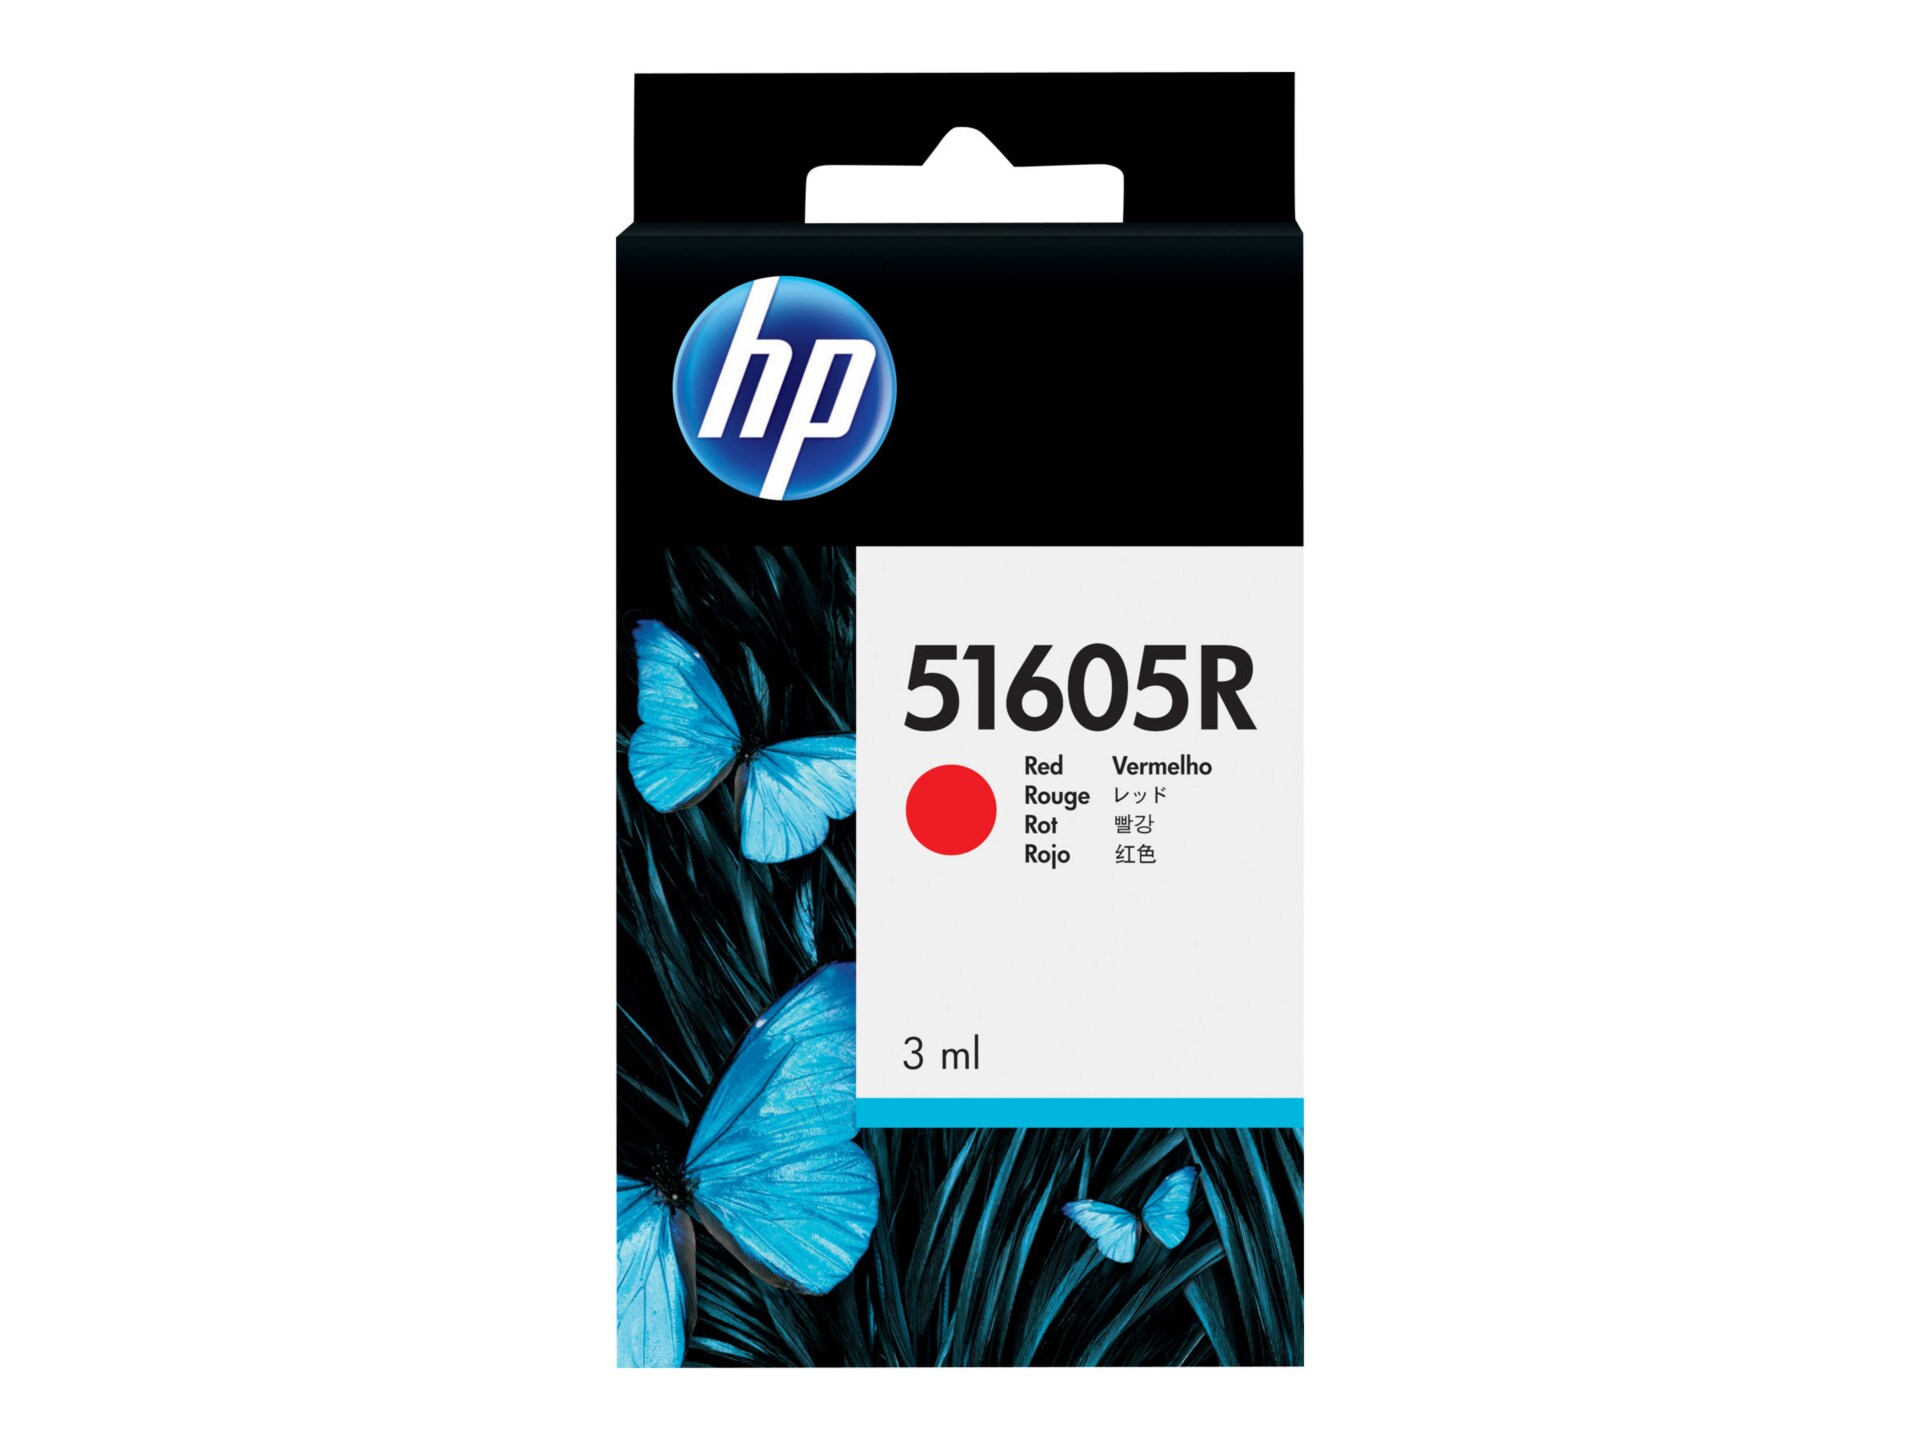 HP TIJ 1.0 Print Cartridge (51605R)